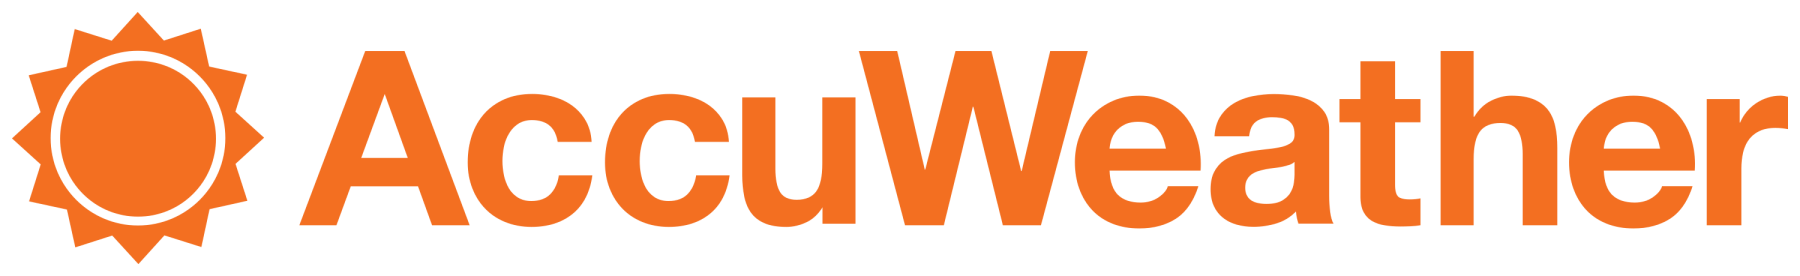 AccuWeather_Logo.svg_